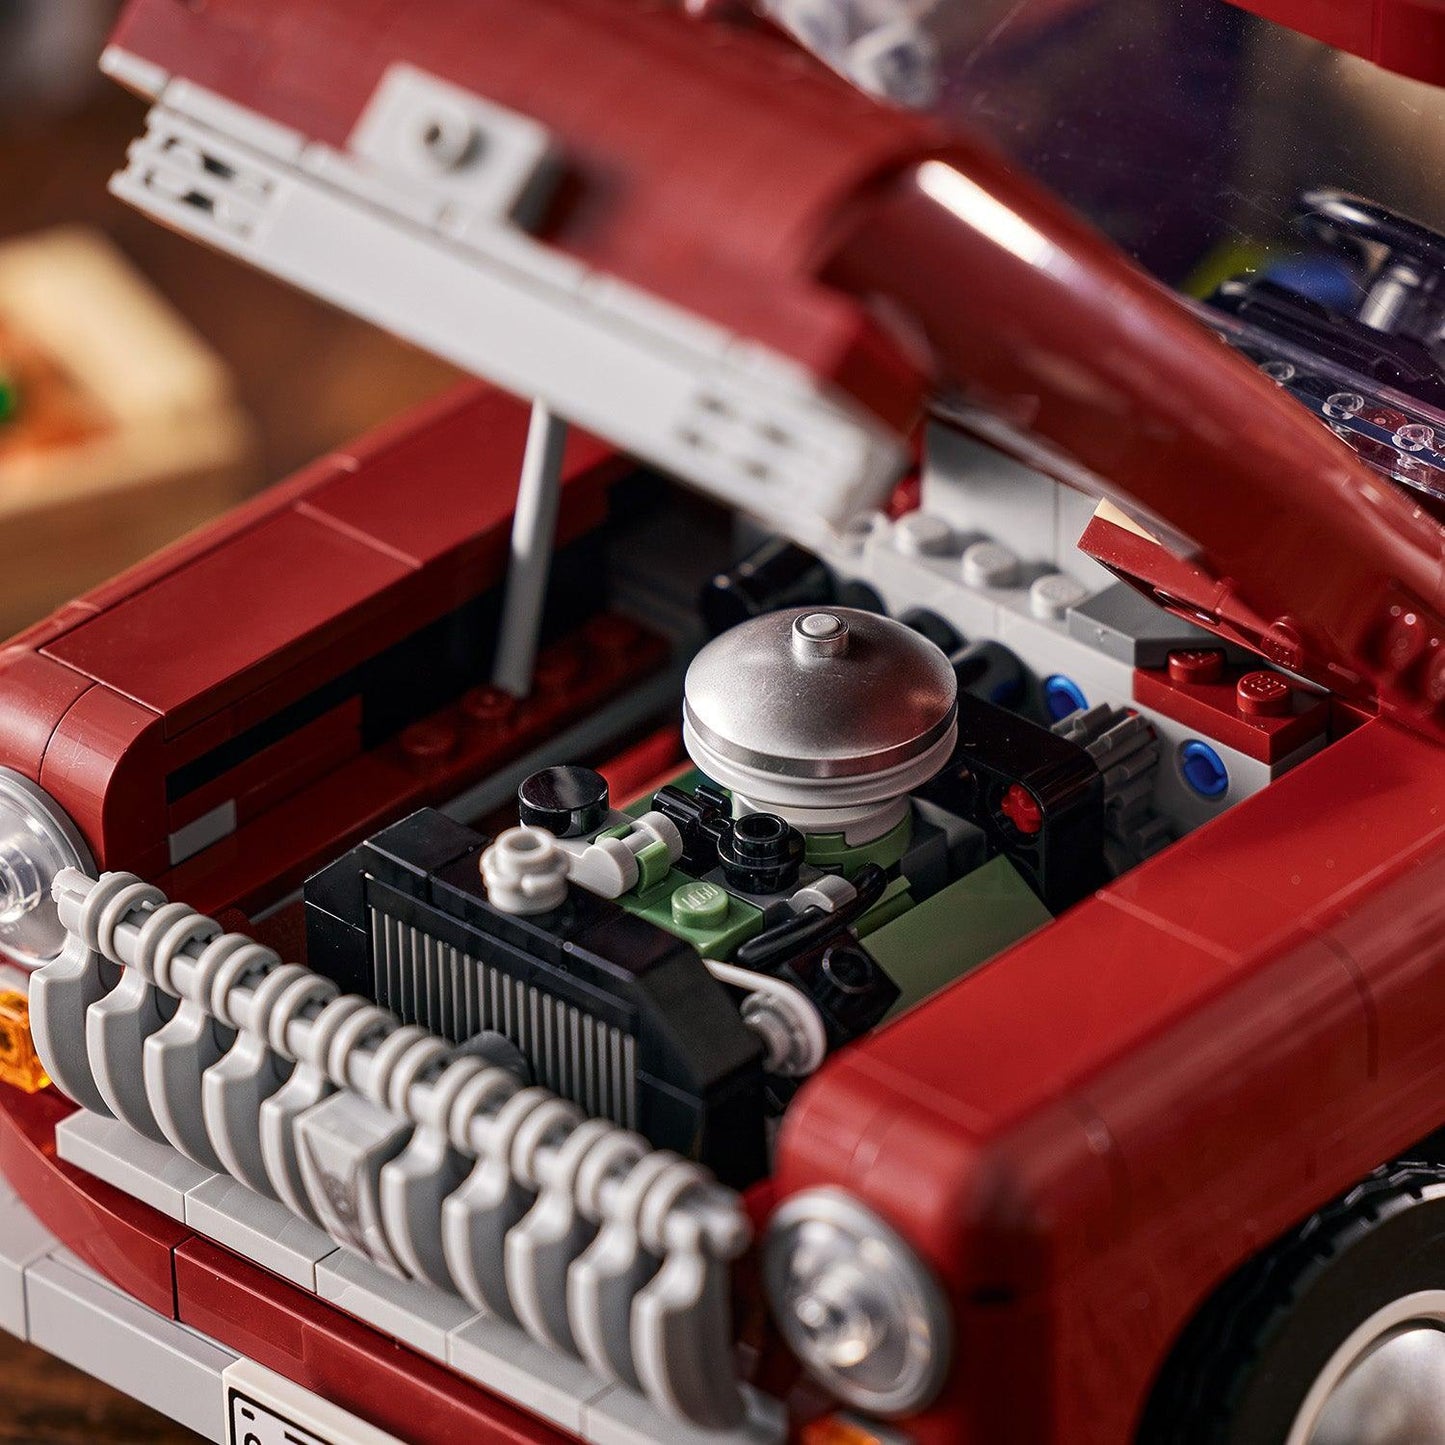 LEGO Red Pick-Up truck 10290 Creator Expert LEGO CREATOR EXPERT @ 2TTOYS LEGO €. 134.99